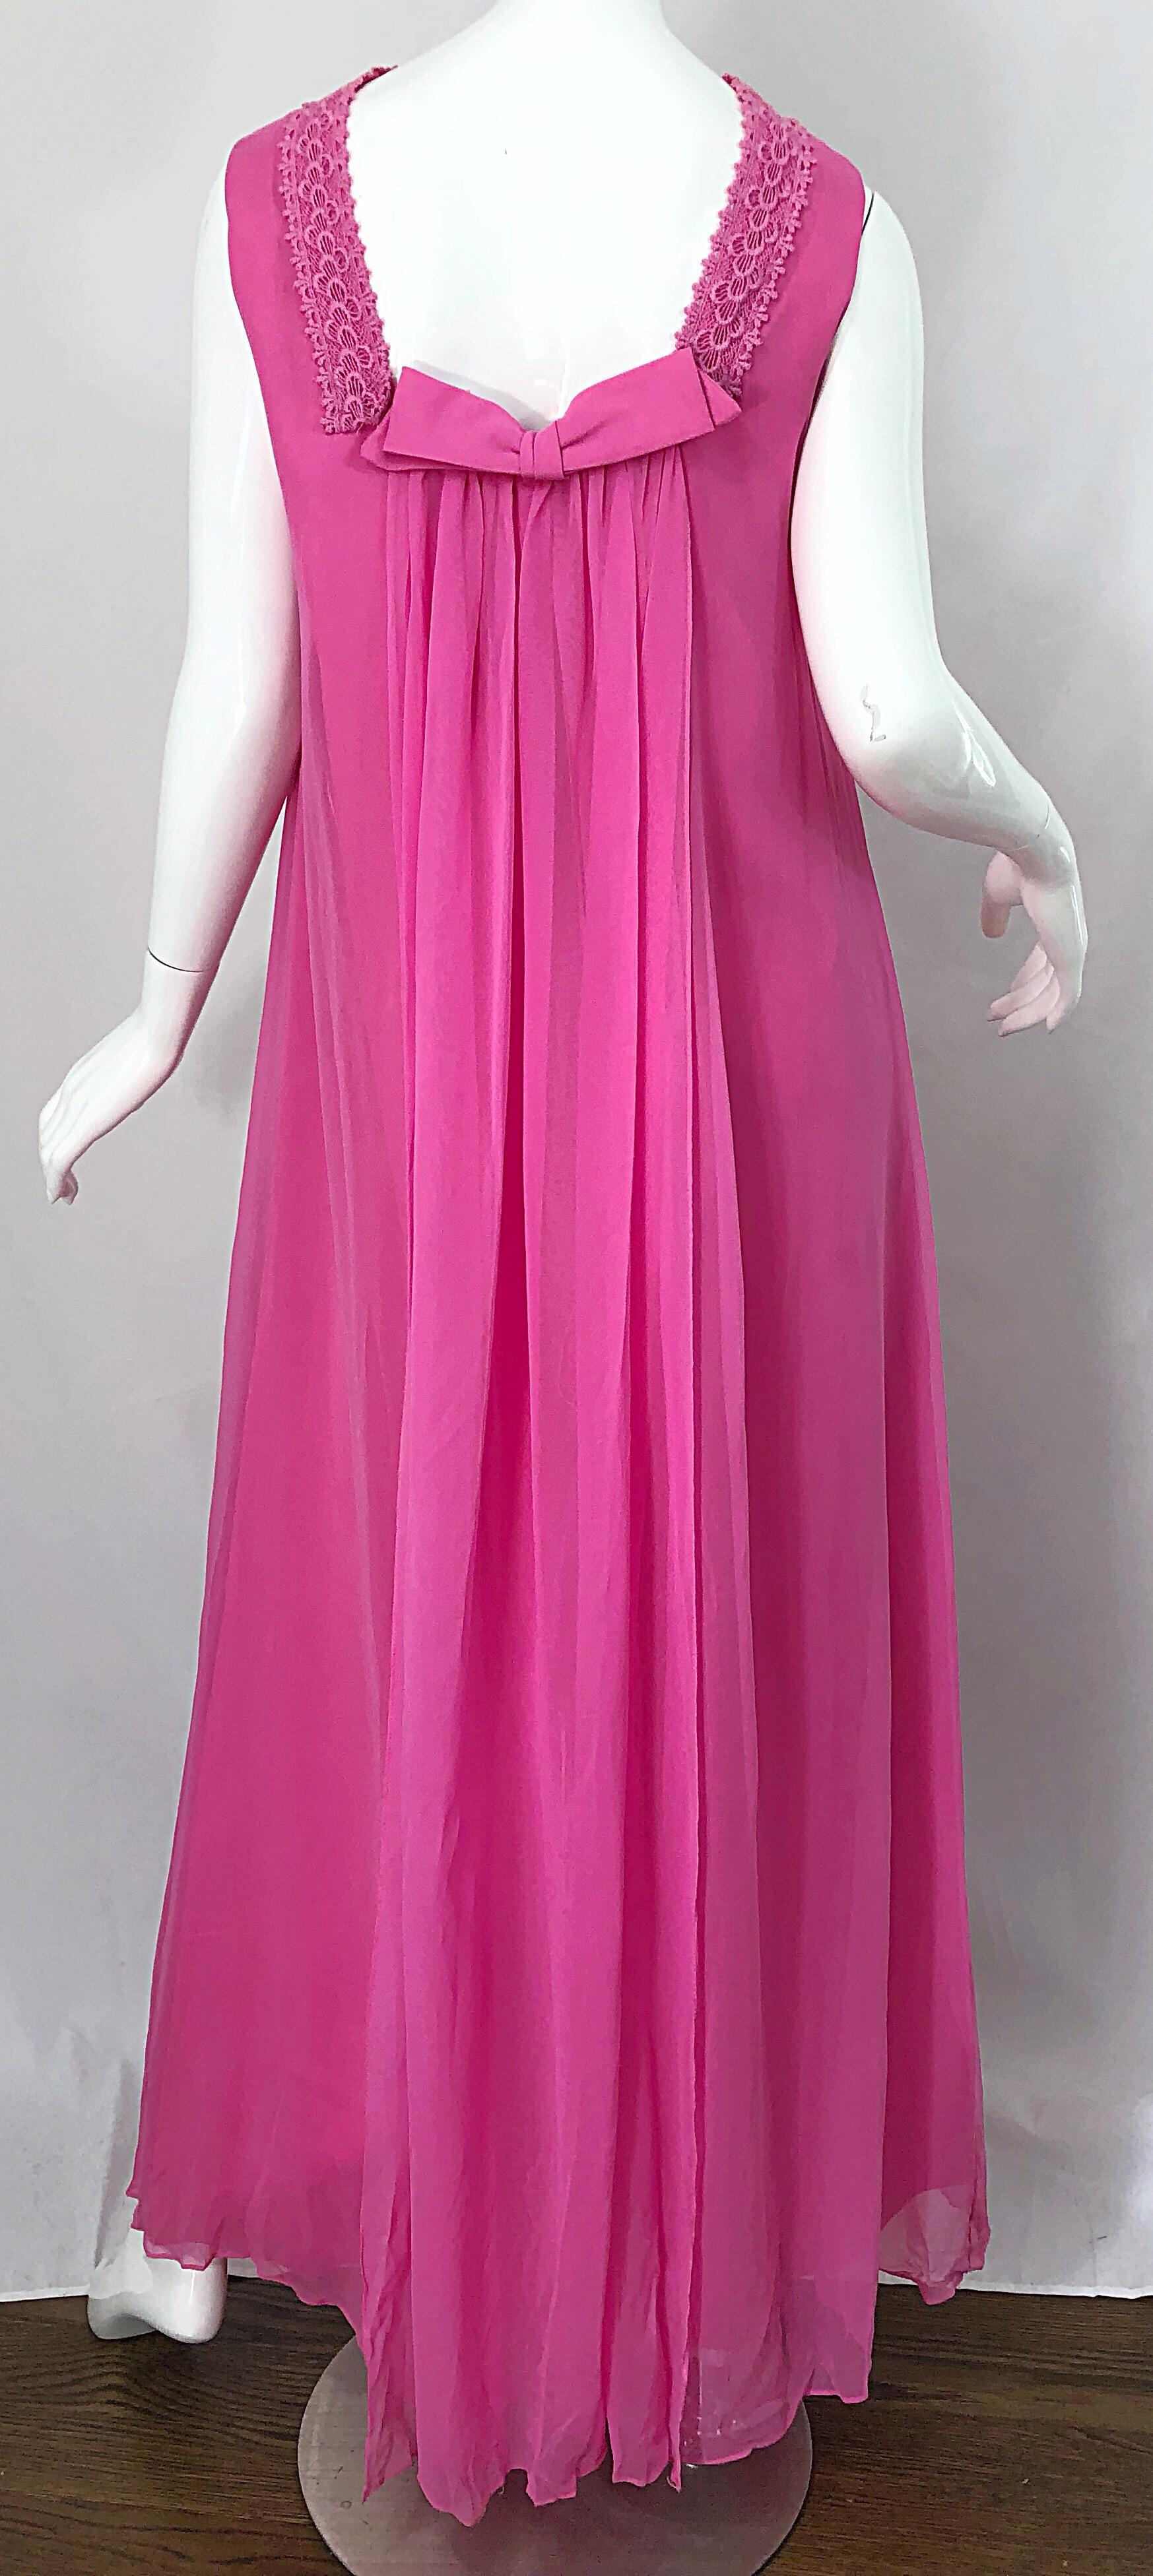 1960s Bubblegum Pink Silk Chiffon High Neck Demi Couture Vintage 60s Gown Dress For Sale 6